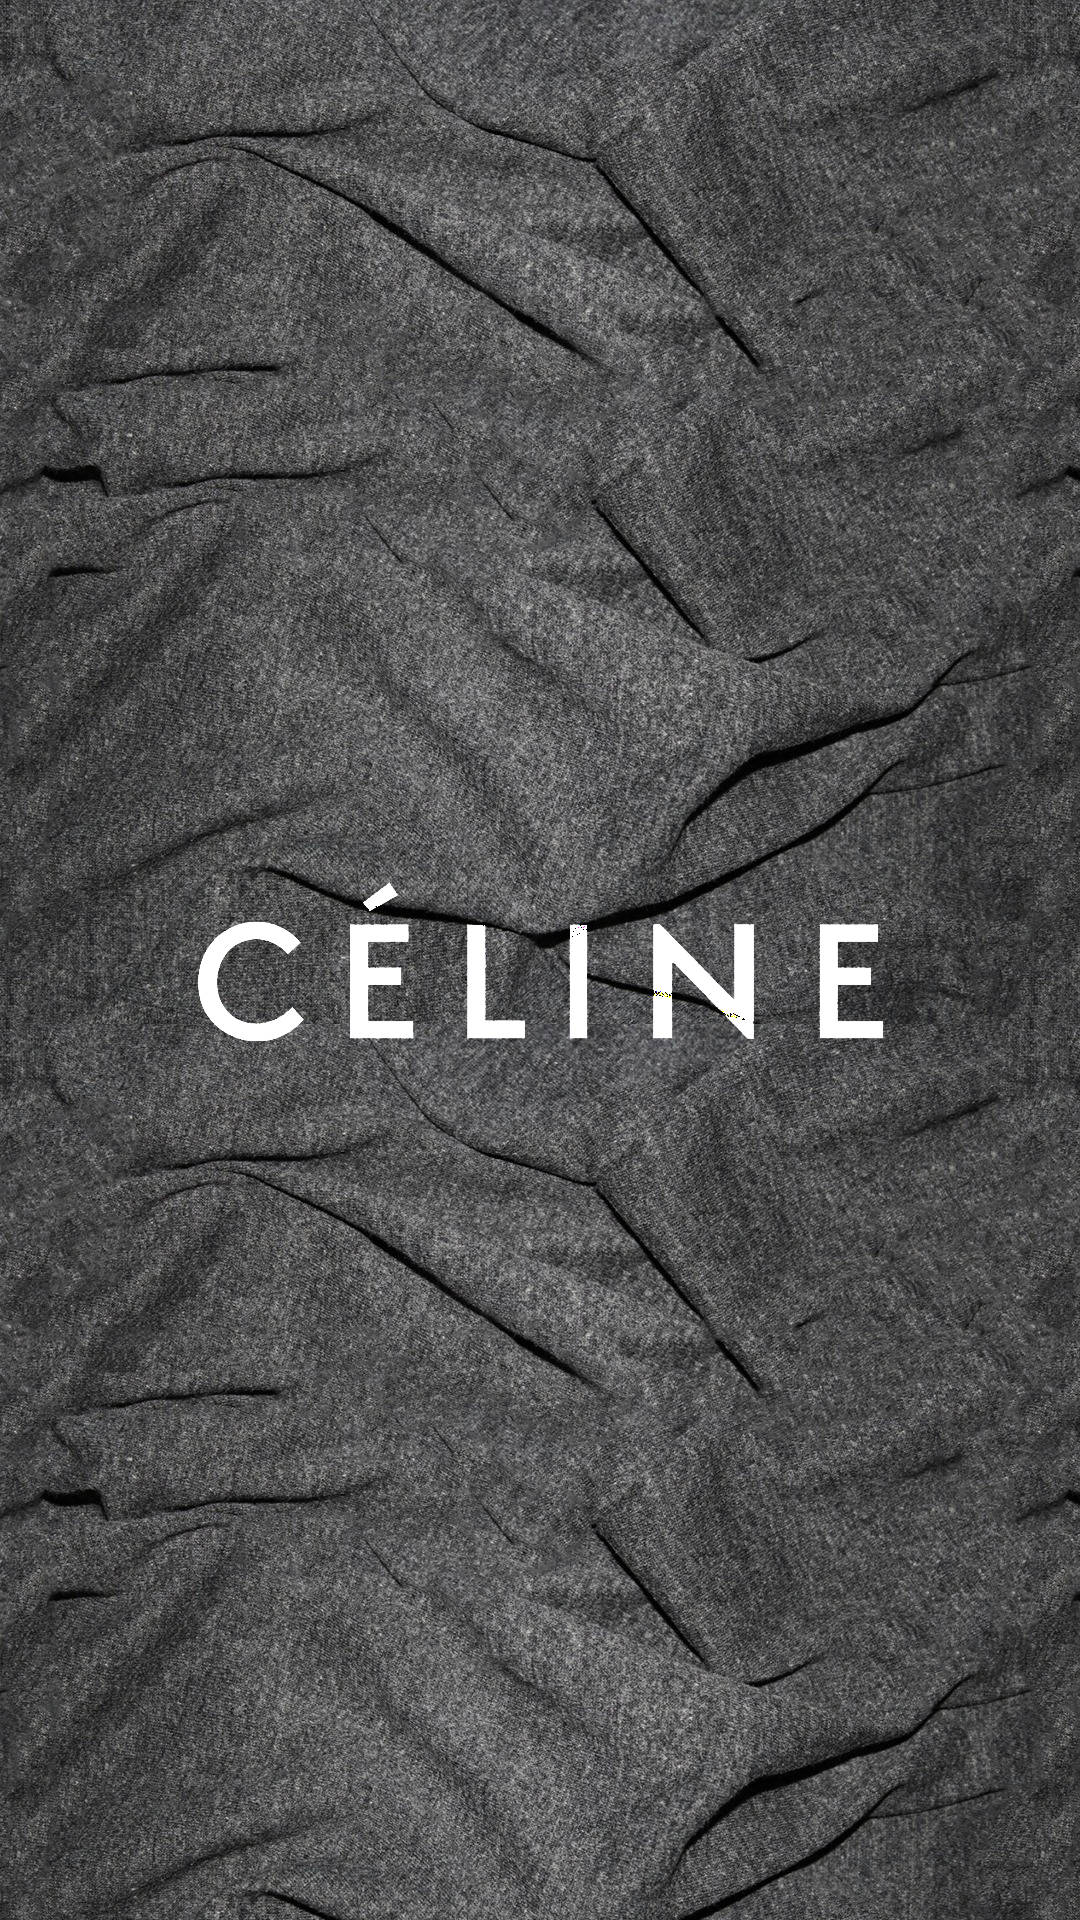 Celine Background Wallpaper